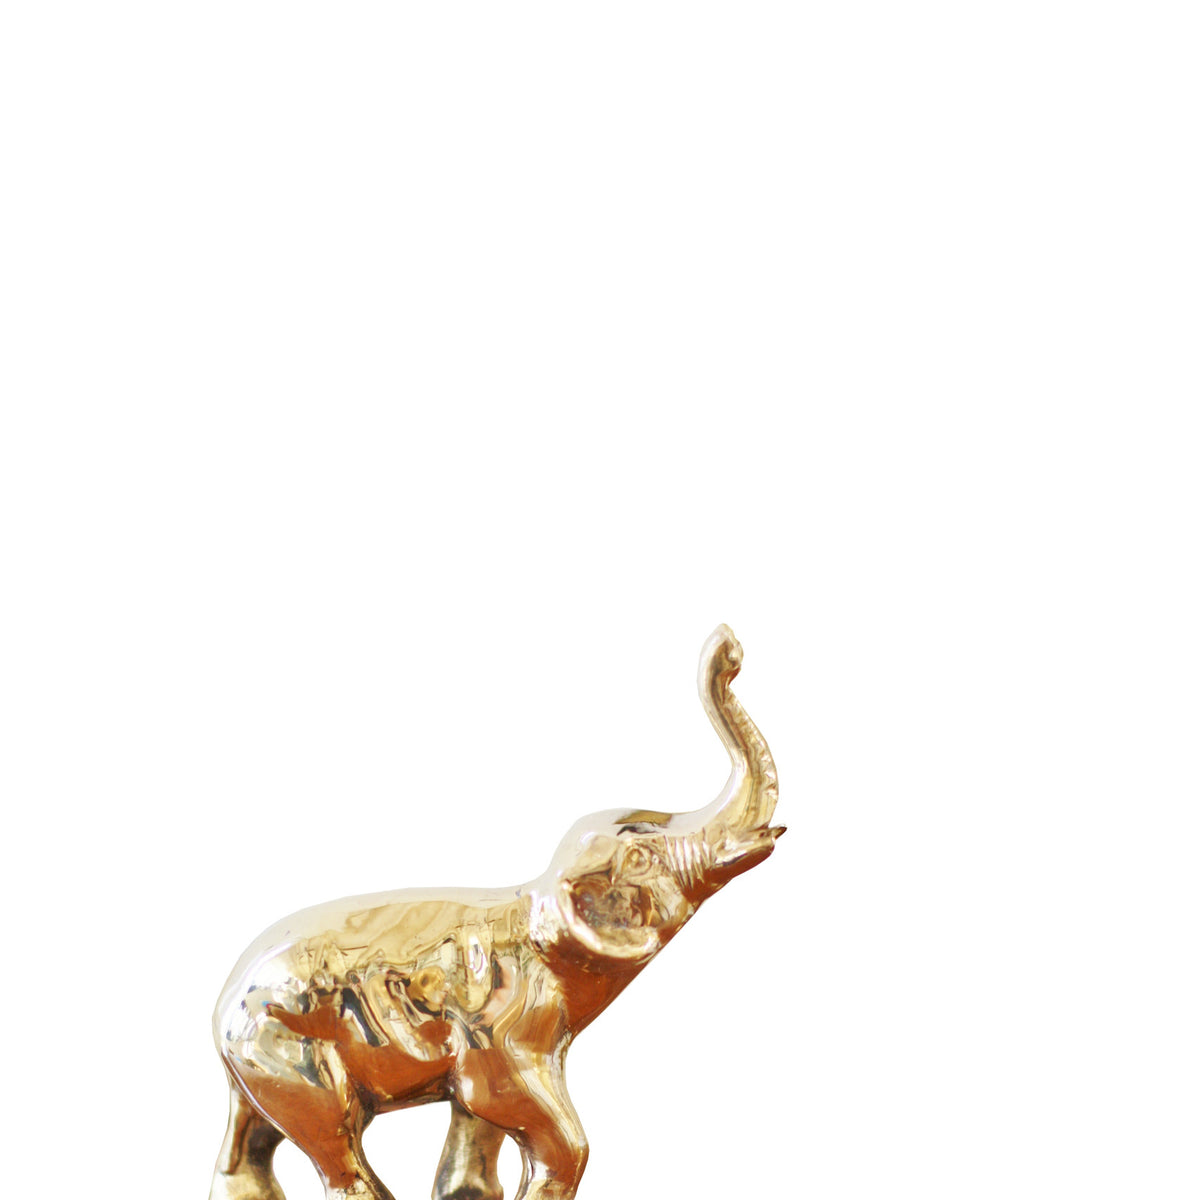 3*1.5*6 Inch Unique Brass Figurine, Good Detailing, Elephant